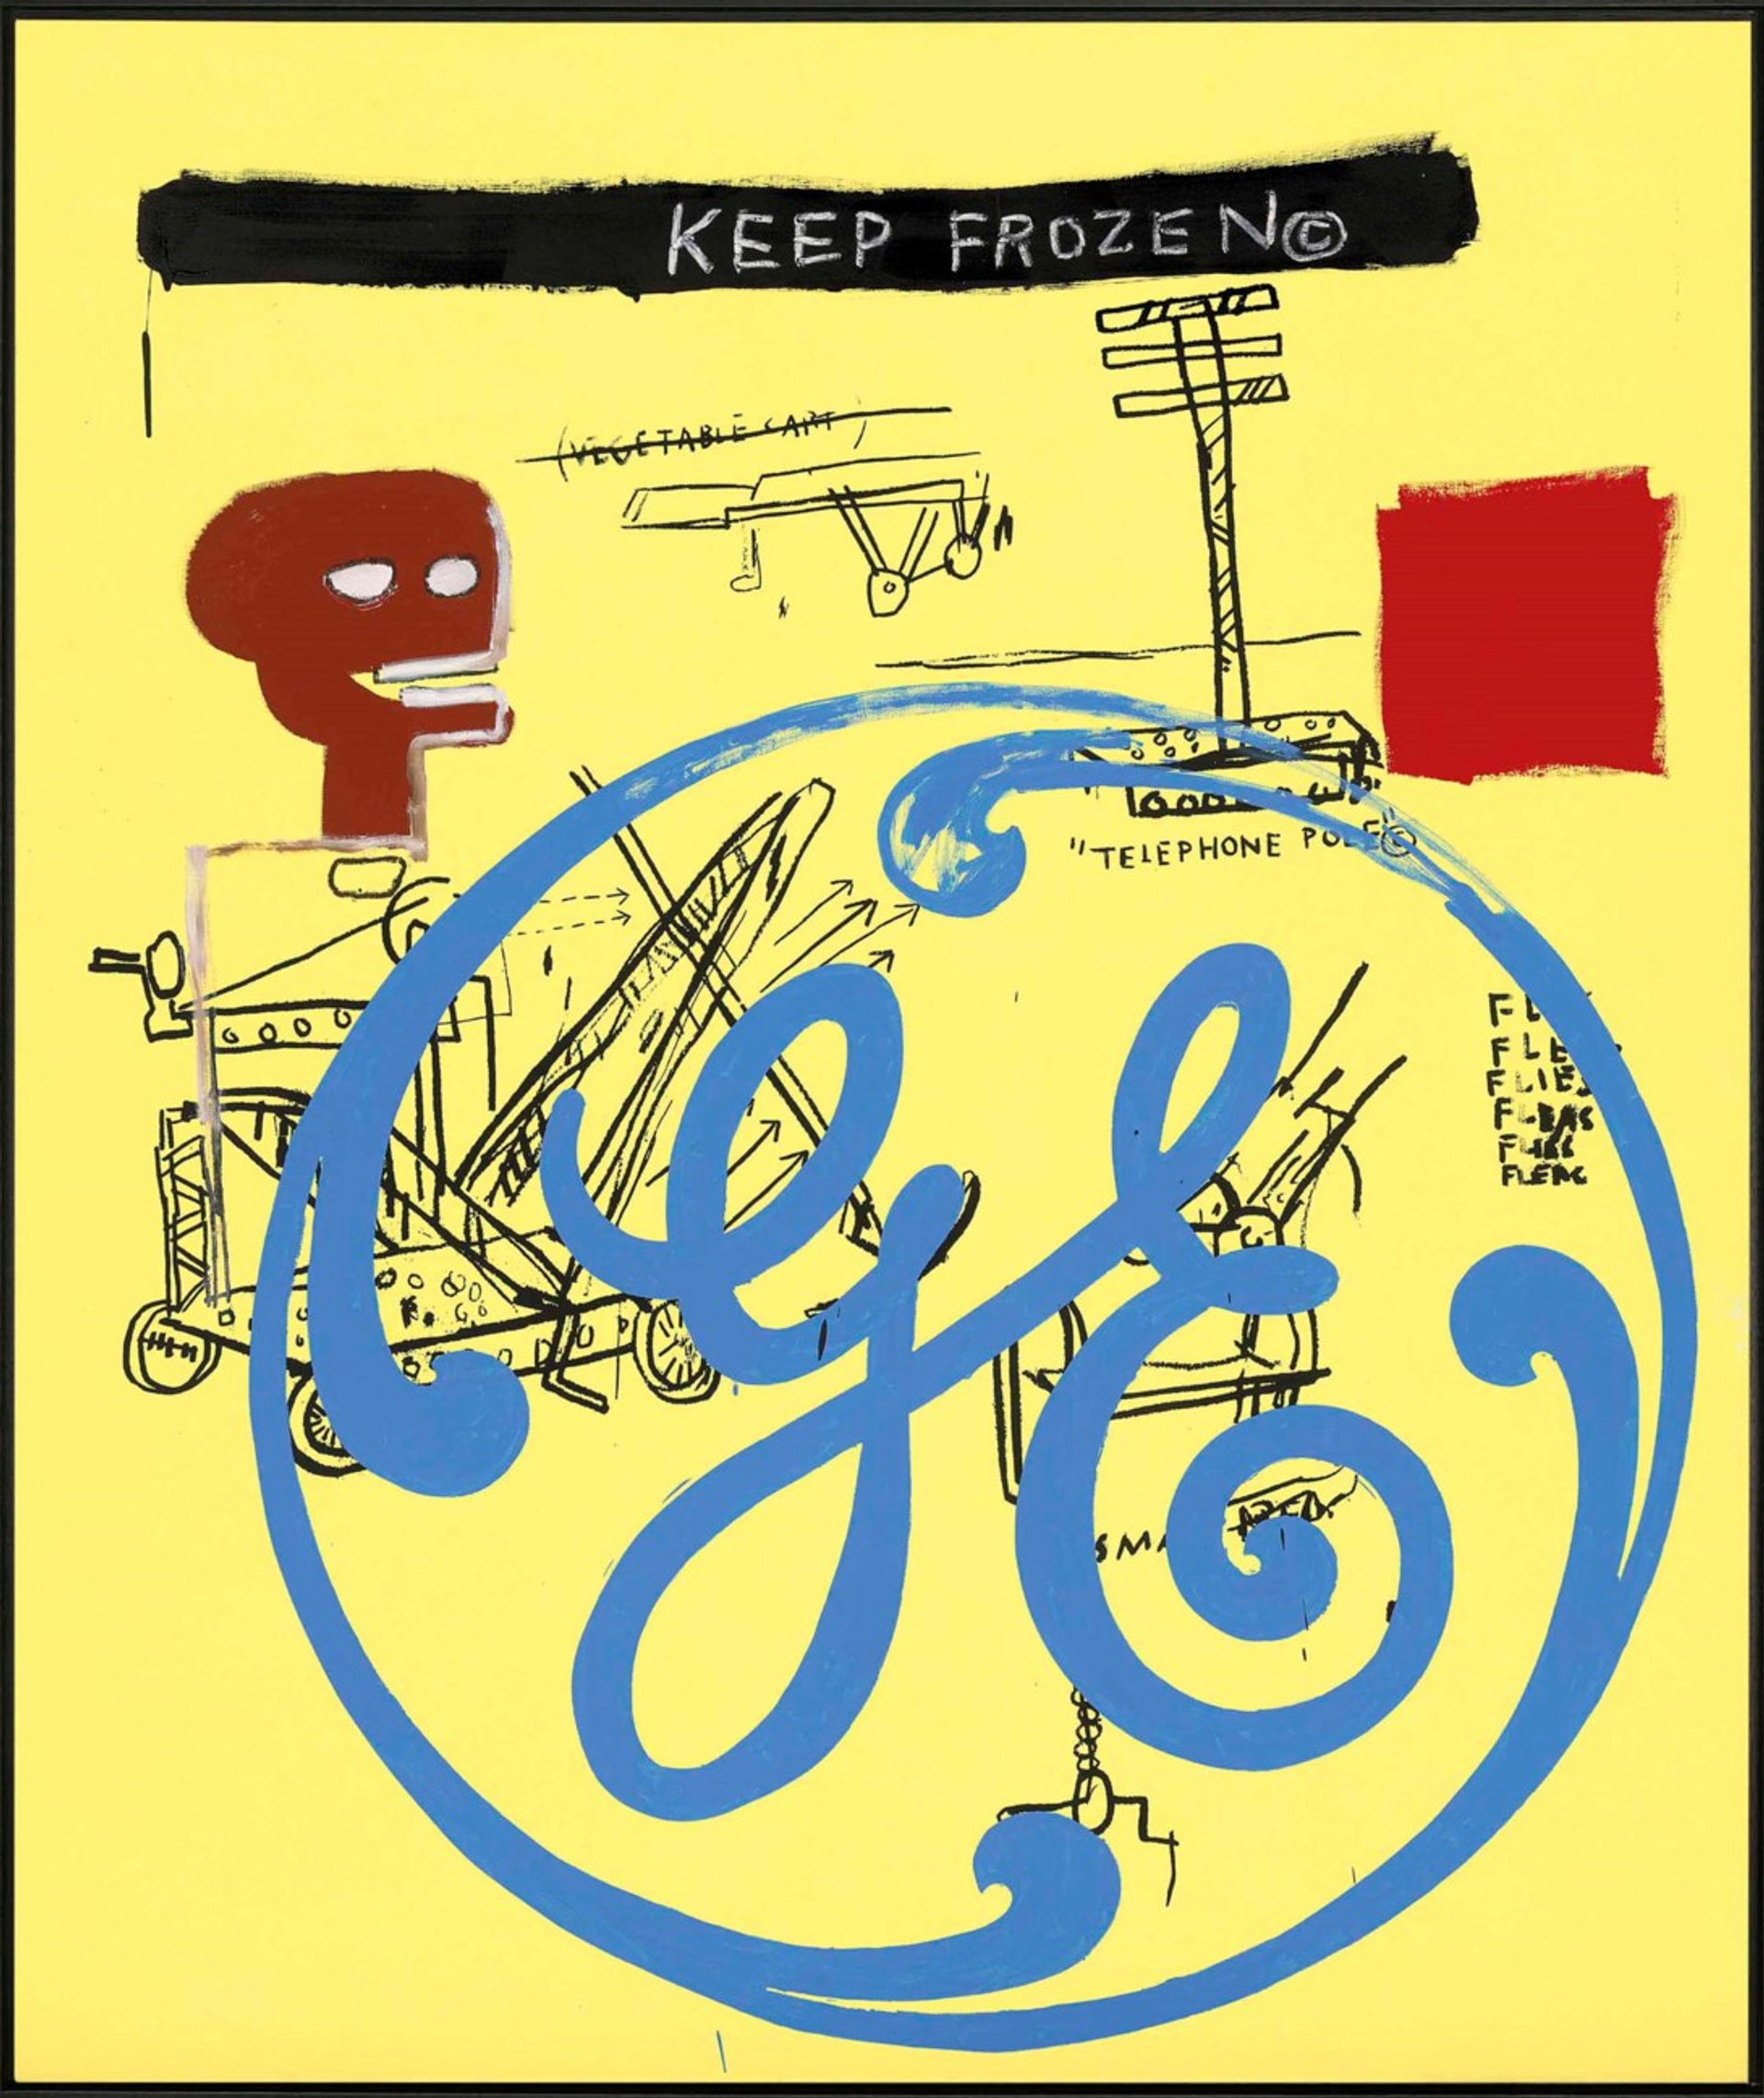 Keep Frozen (General Electric) by Jean-Michel Basquiat and Andy Warhol - MyArtBroker